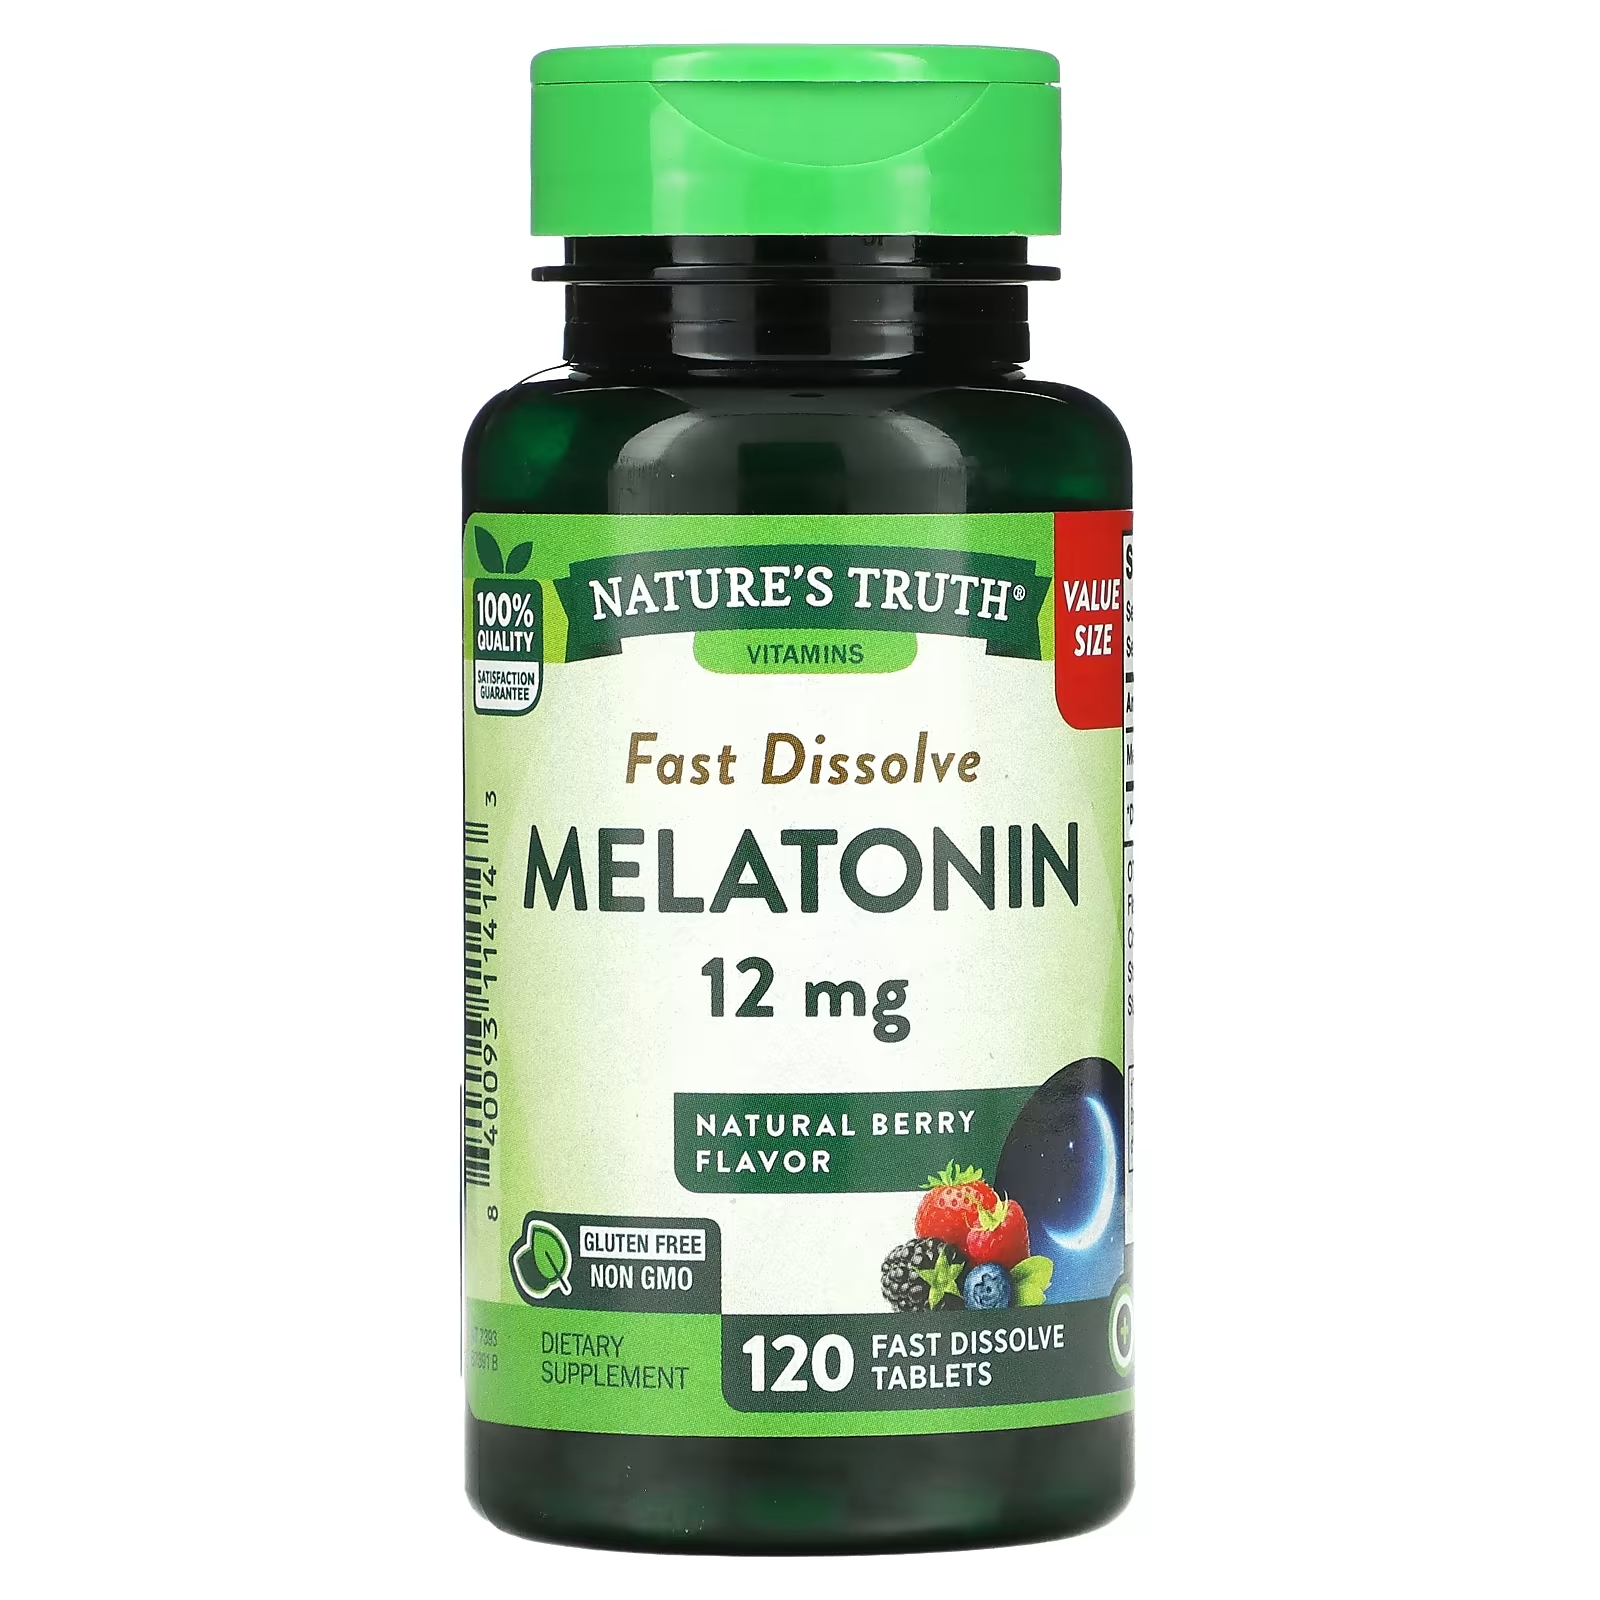 Nature's Truth Быстрорастворимый мелатонин натуральные ягоды 12 мг, 120 быстрорастворимых таблеток